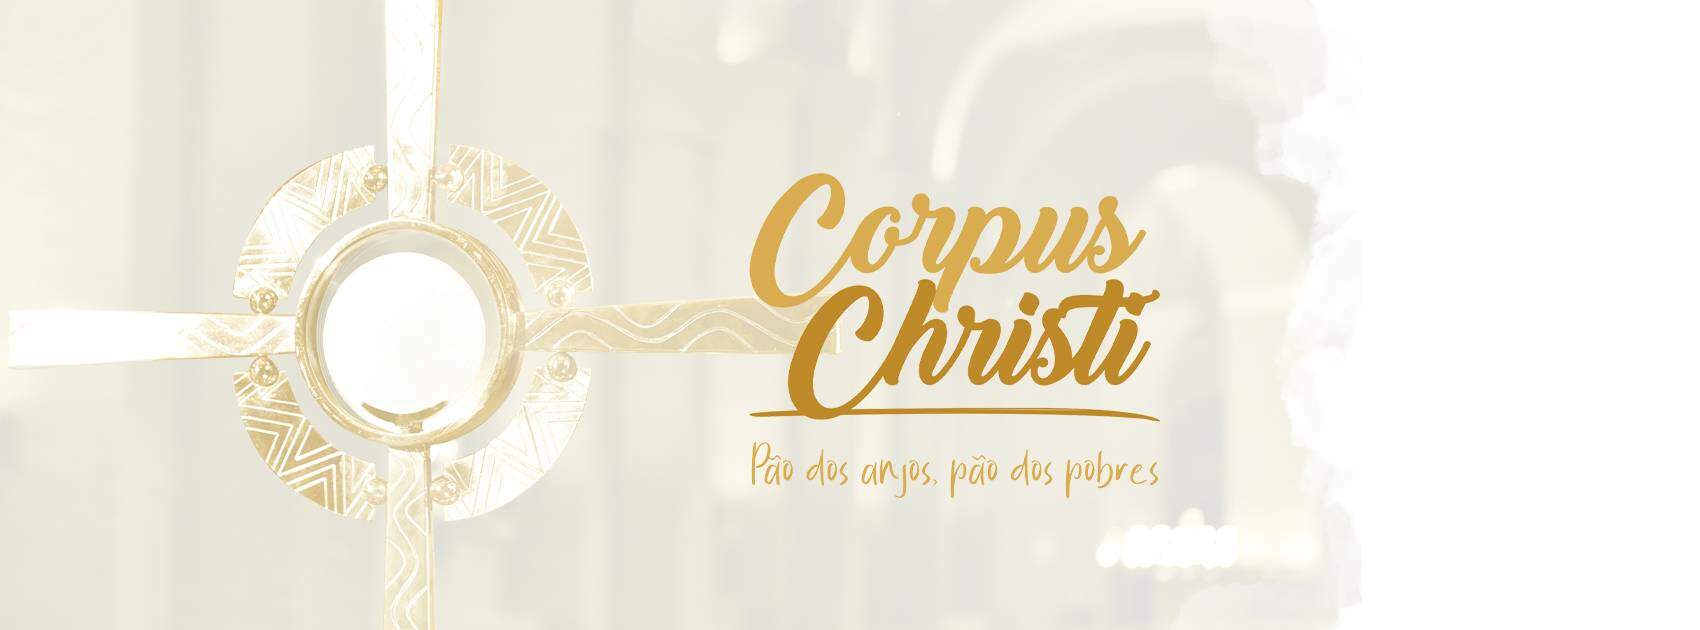 Baixe o e-book de Corpus Christi